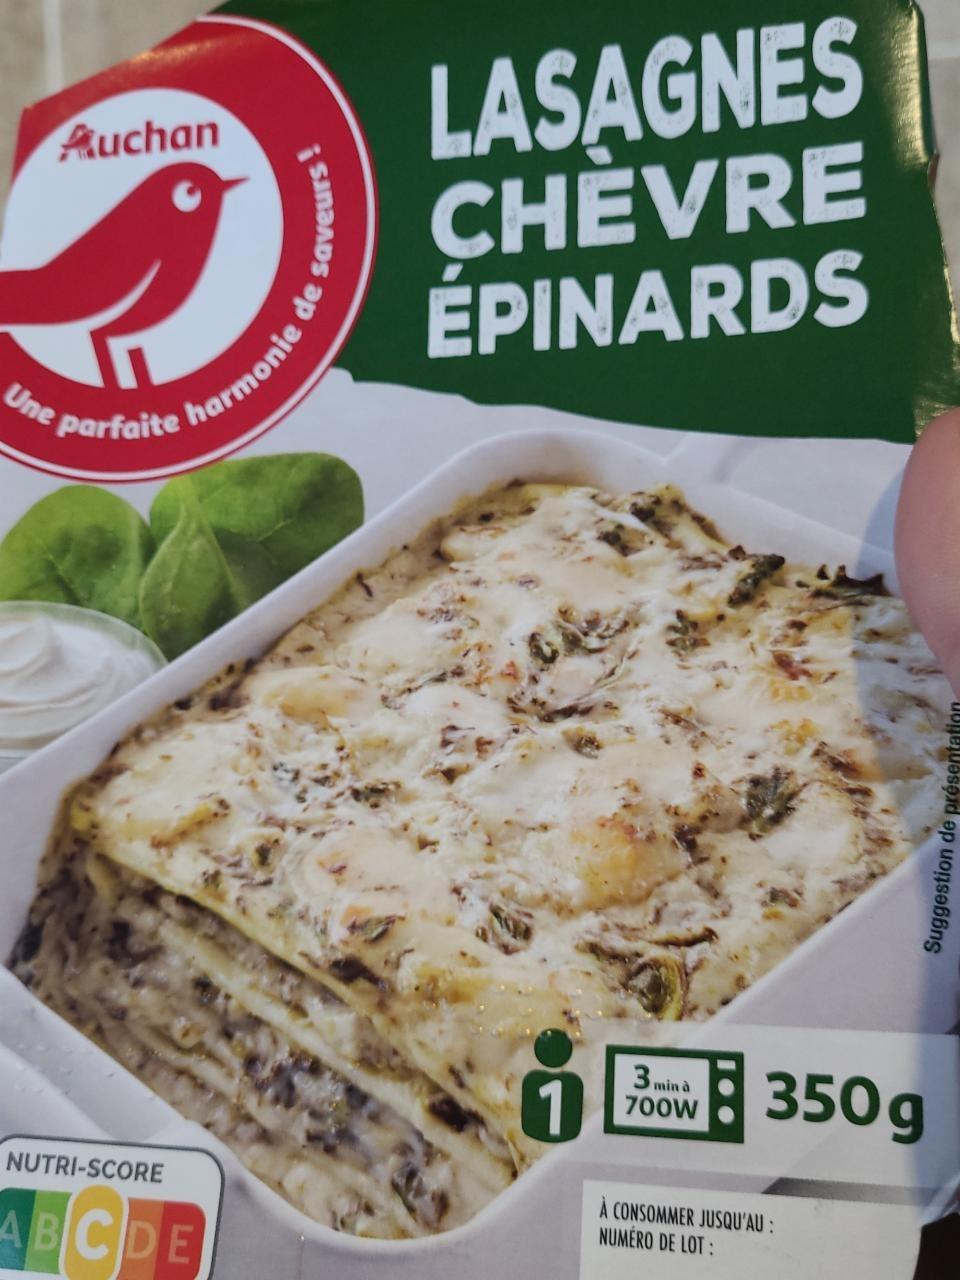 Zdjęcia - La Lasagne Chèvre Épinards - Auchan